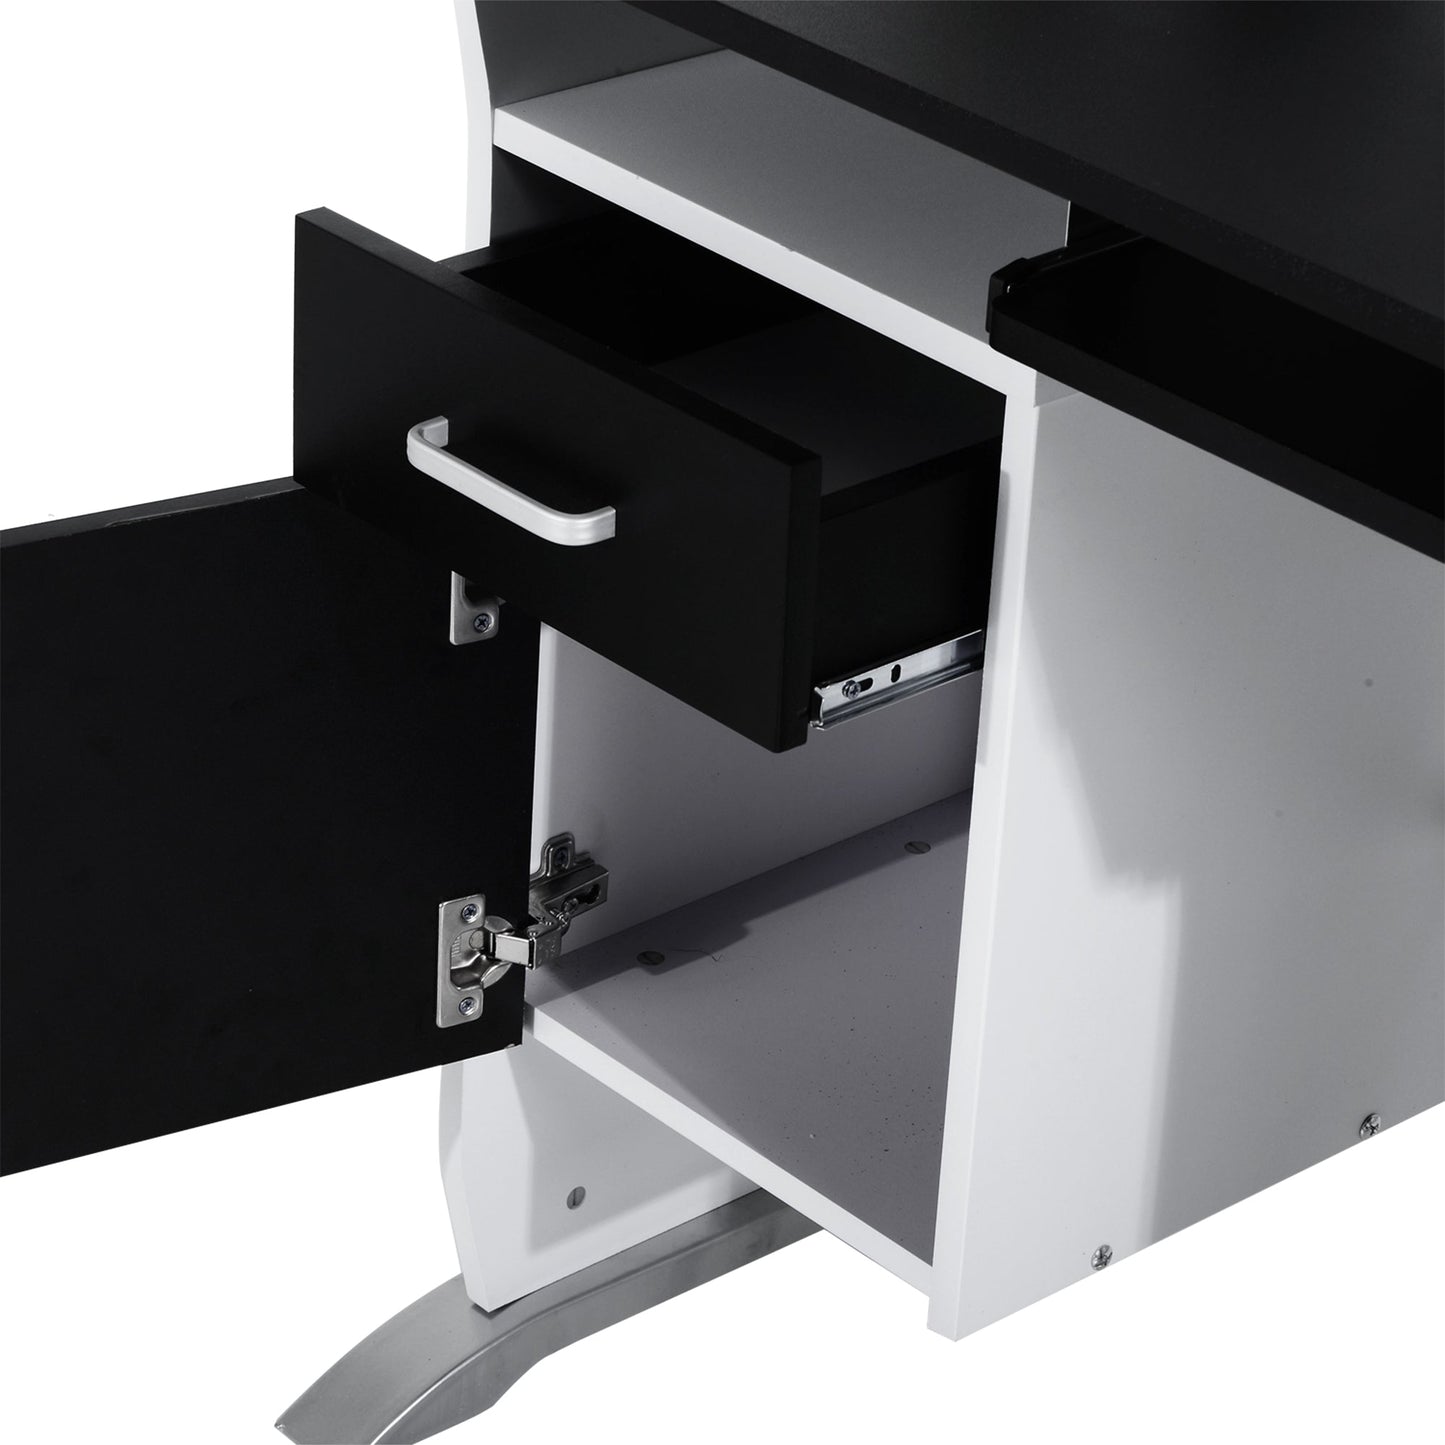 HOMCOM Computer Desk with Sliding Keyboard Tray Storage Drawers and Host Box Shelf Home Office Workstation (Black)